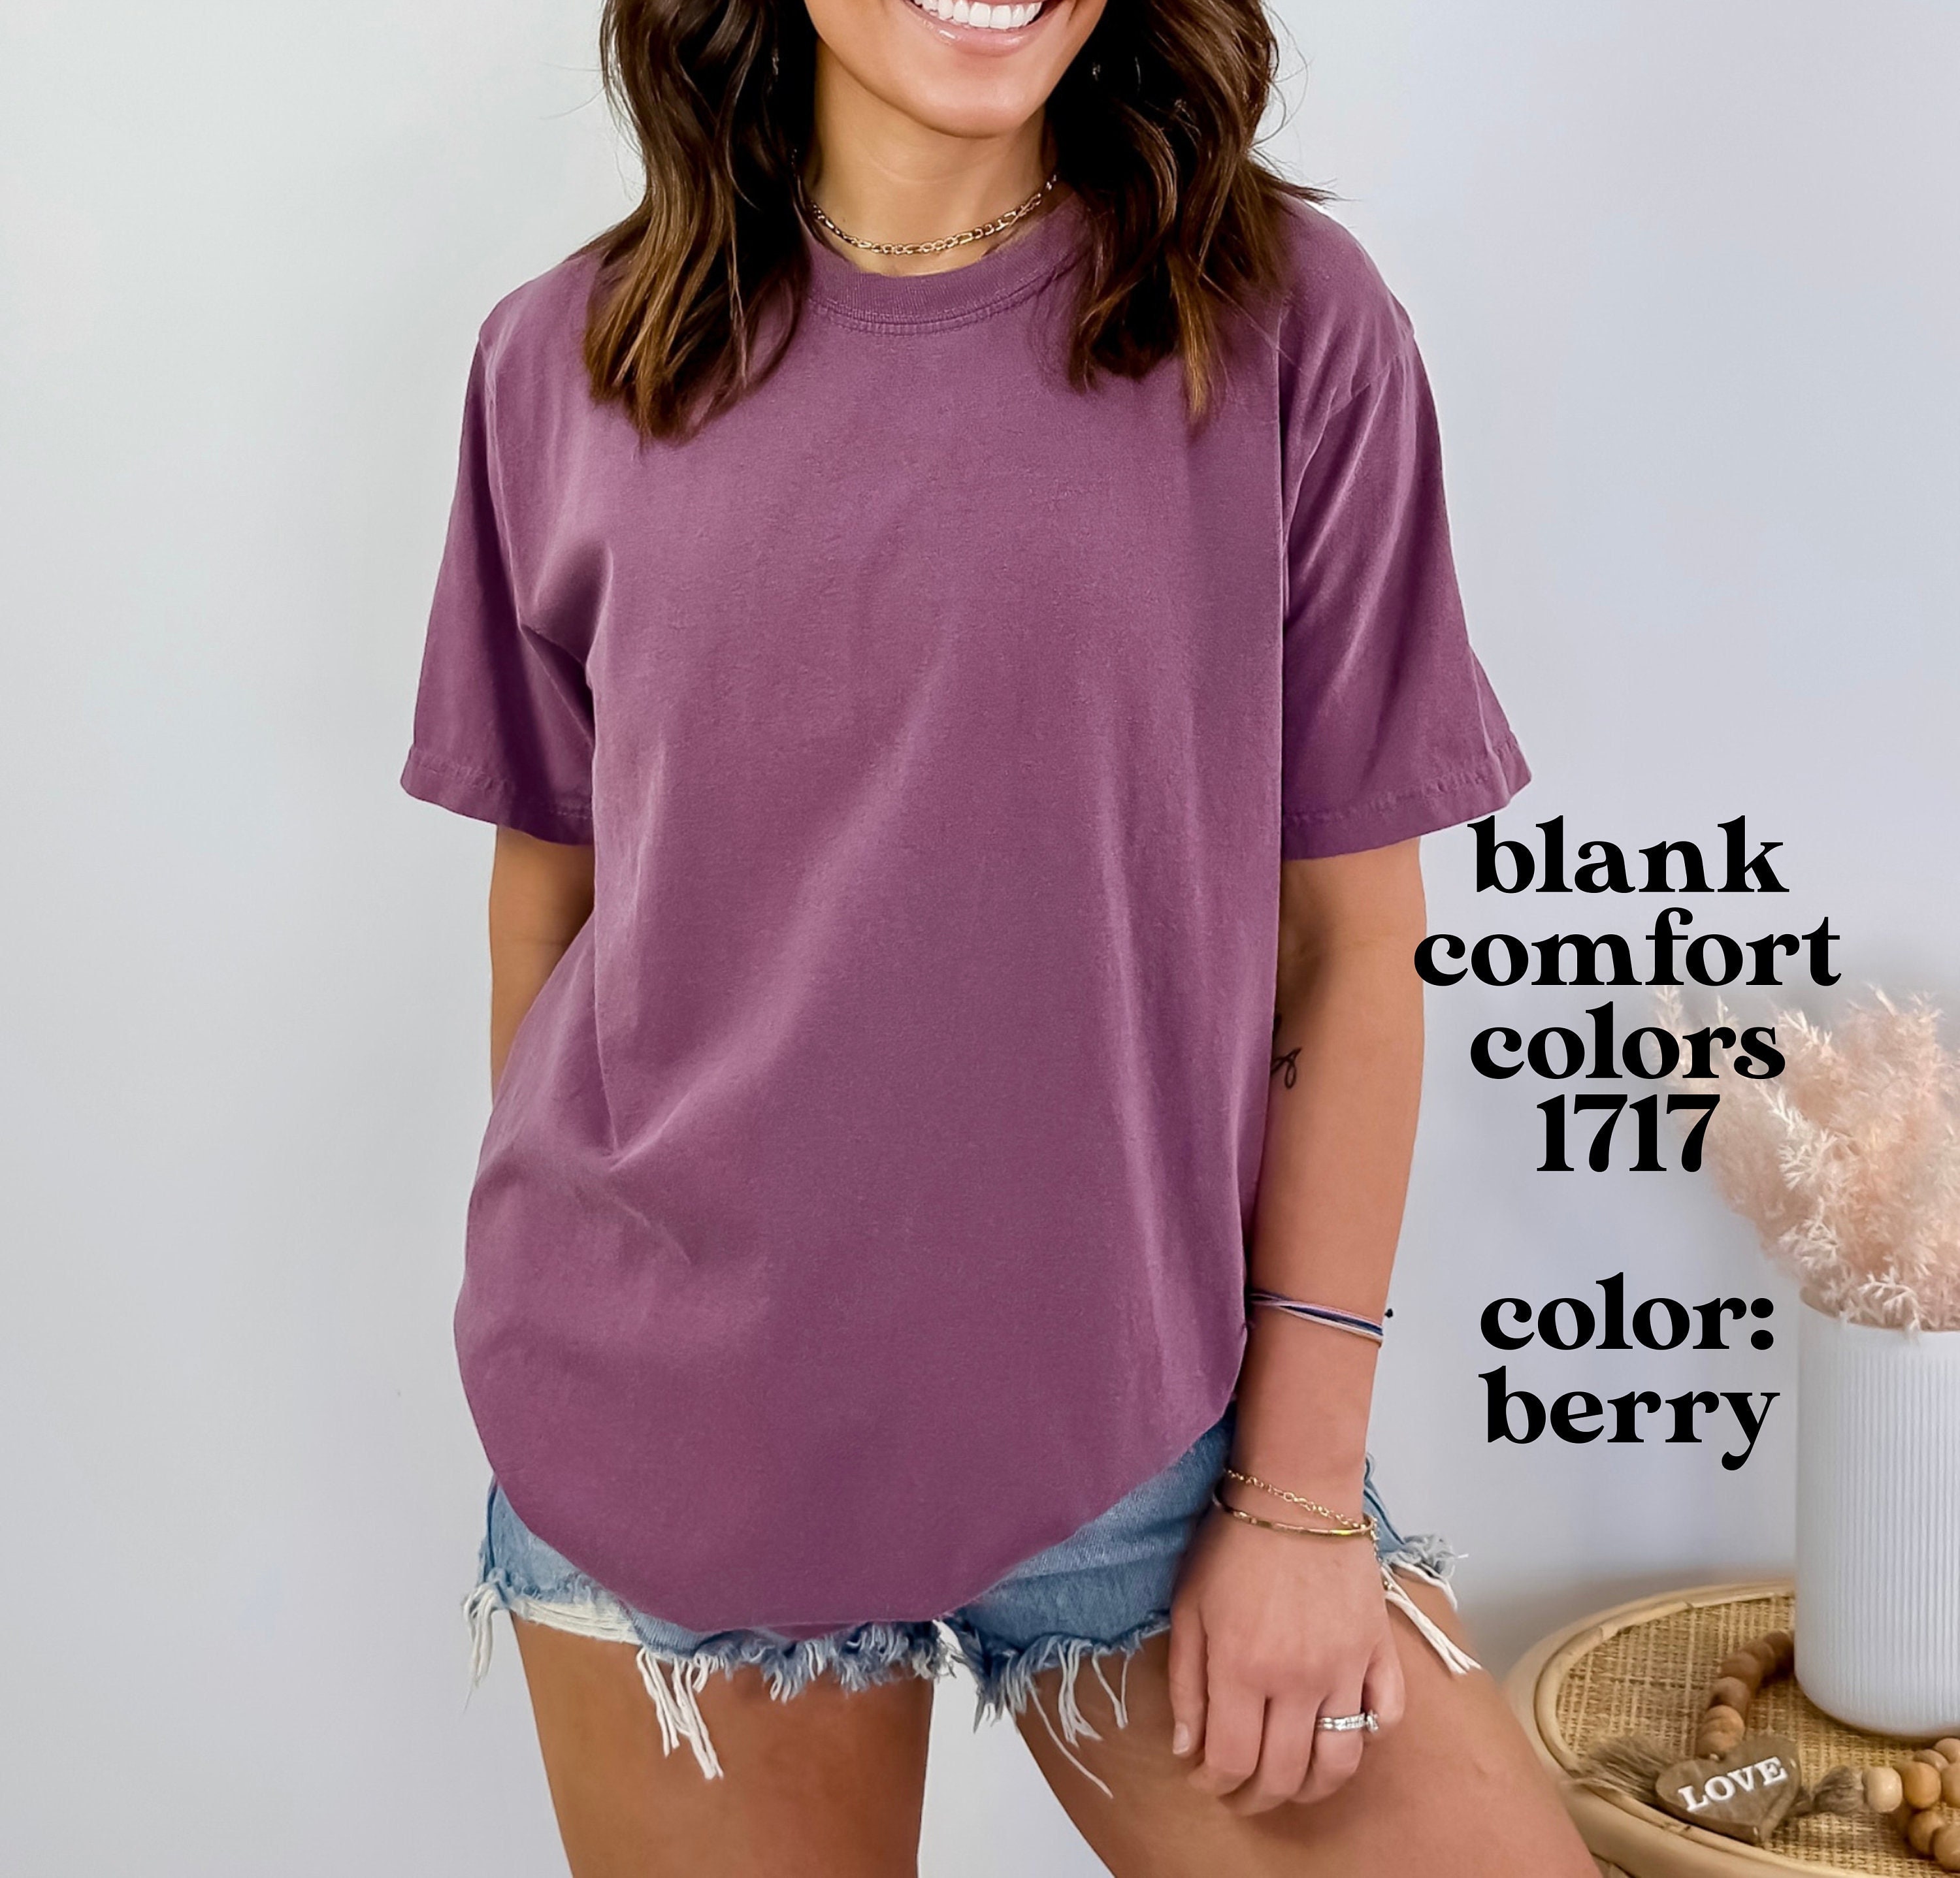 Comfort Colors Blank Shirts Women Men Trendy Blank - Etsy